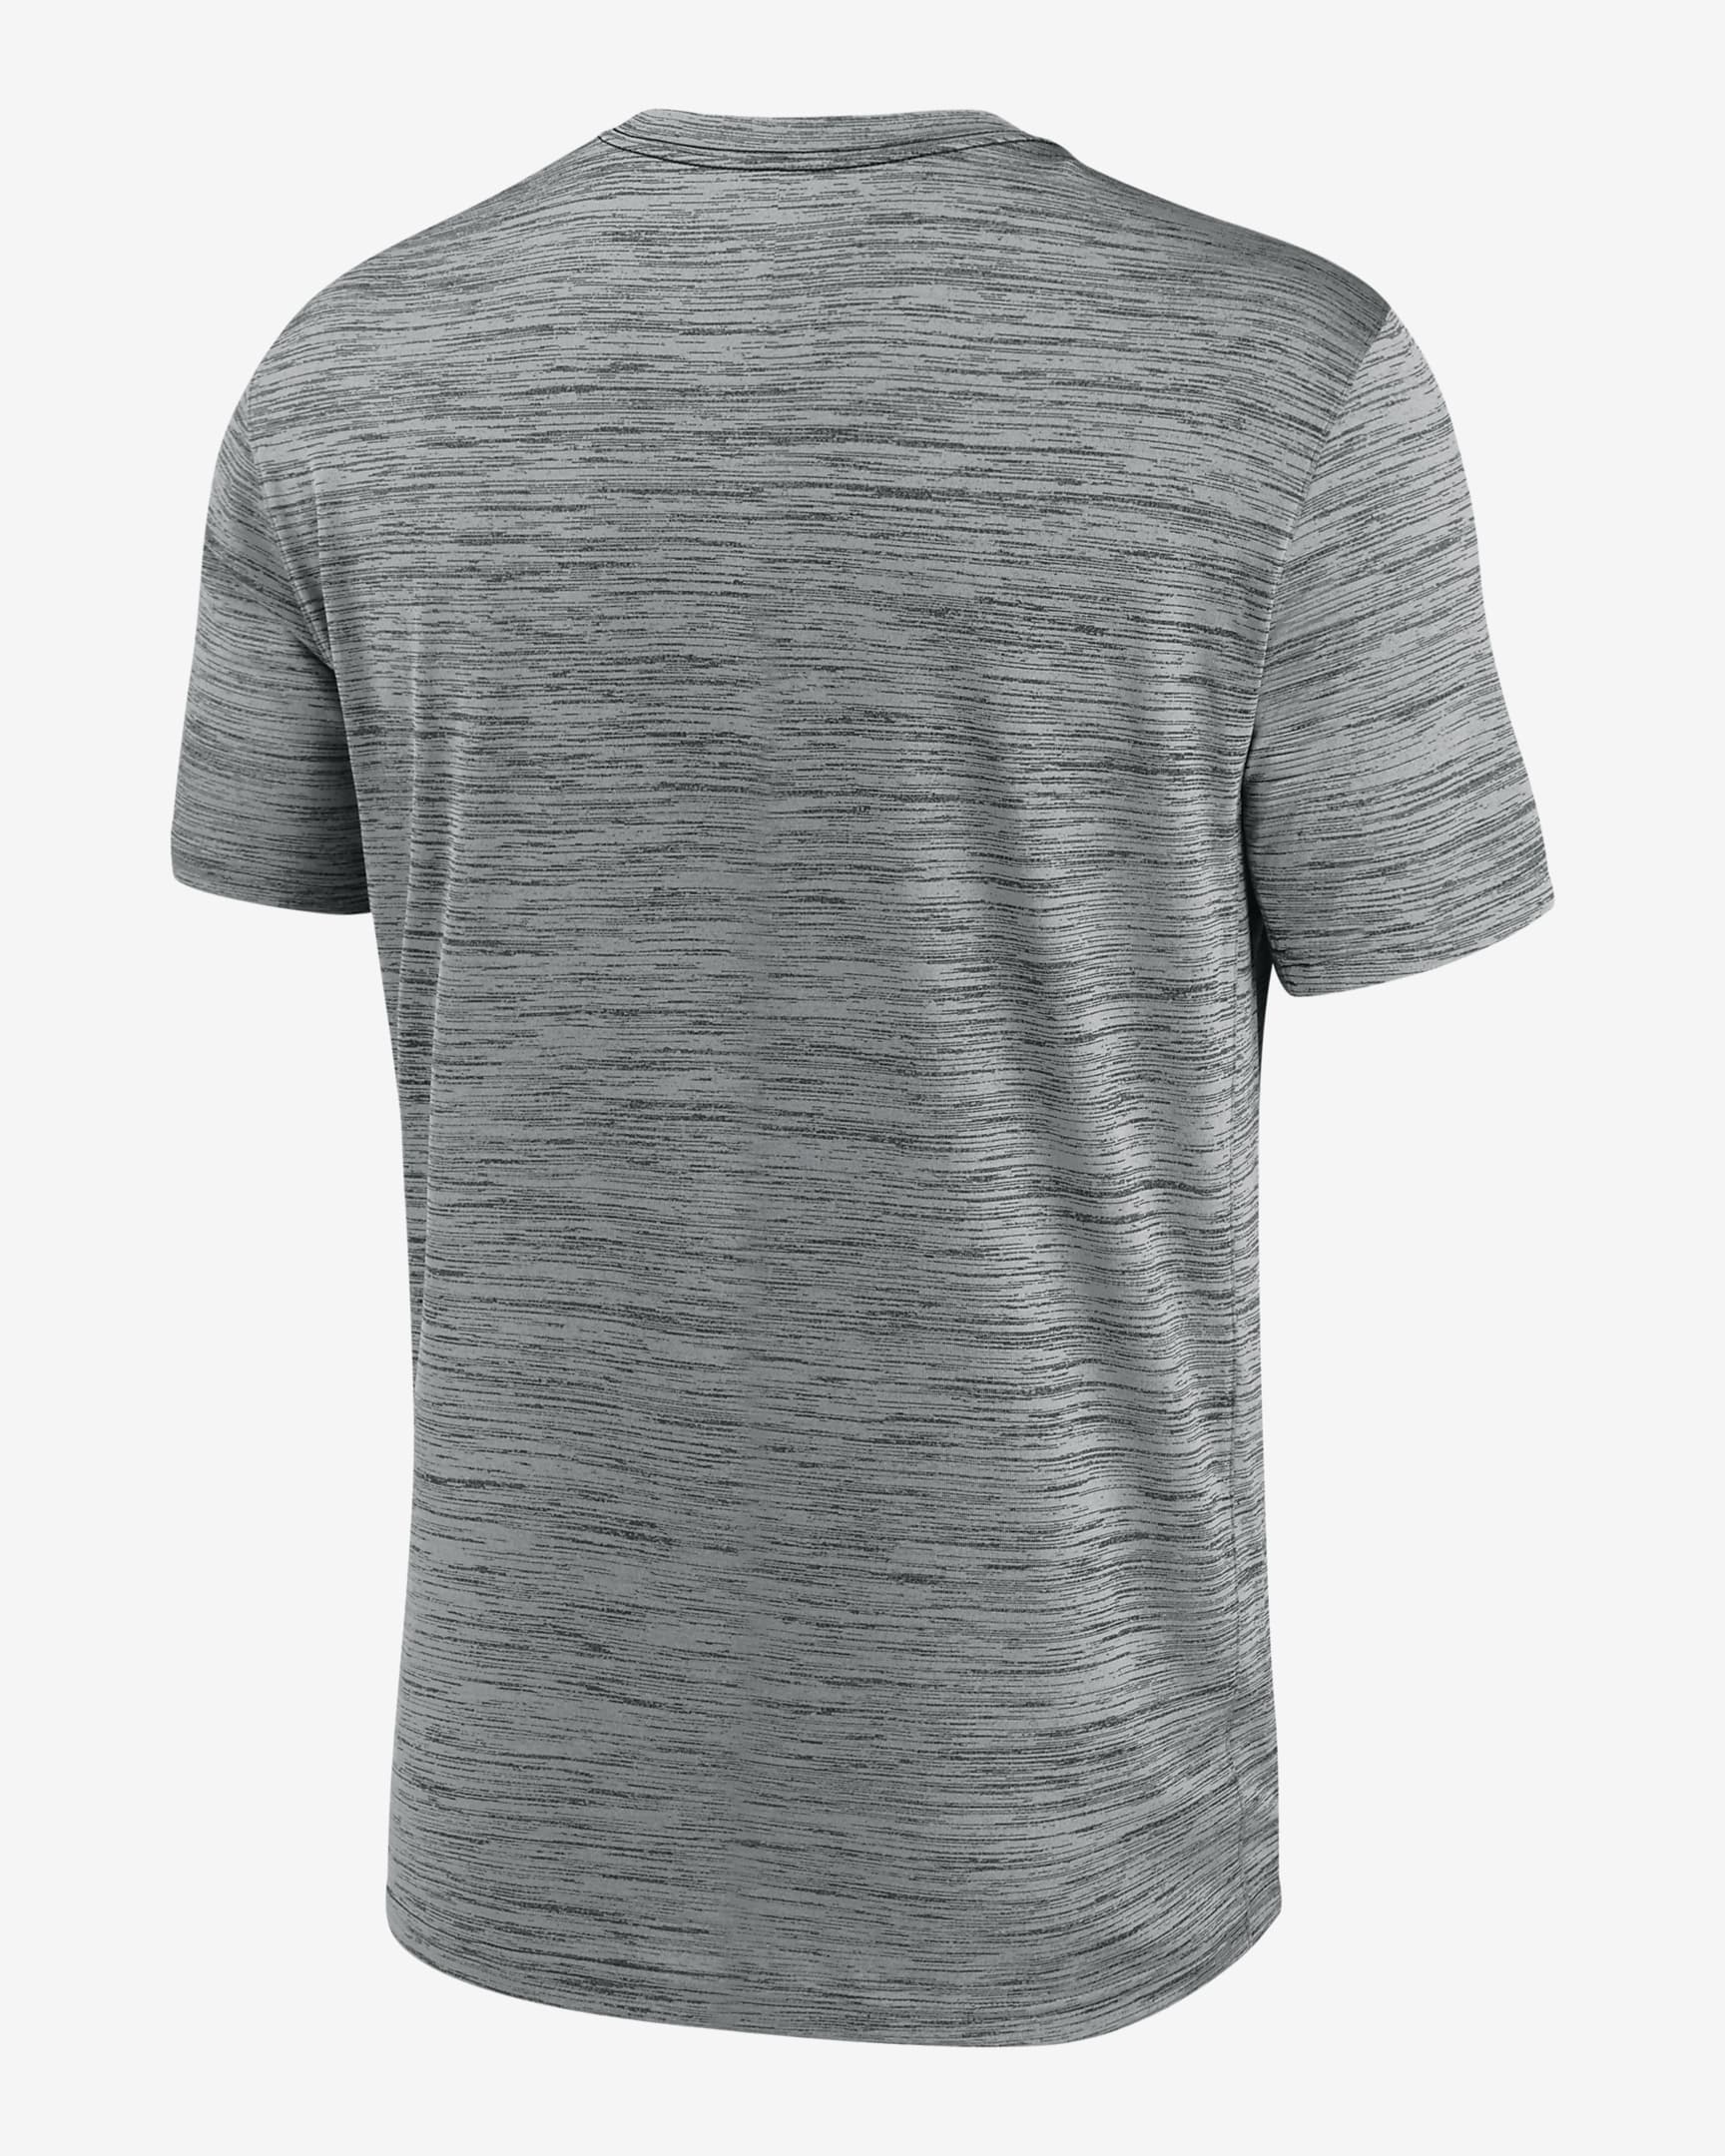 Nike Dri-FIT Sideline Velocity (NFL Jacksonville Jaguars) Men's T-Shirt ...